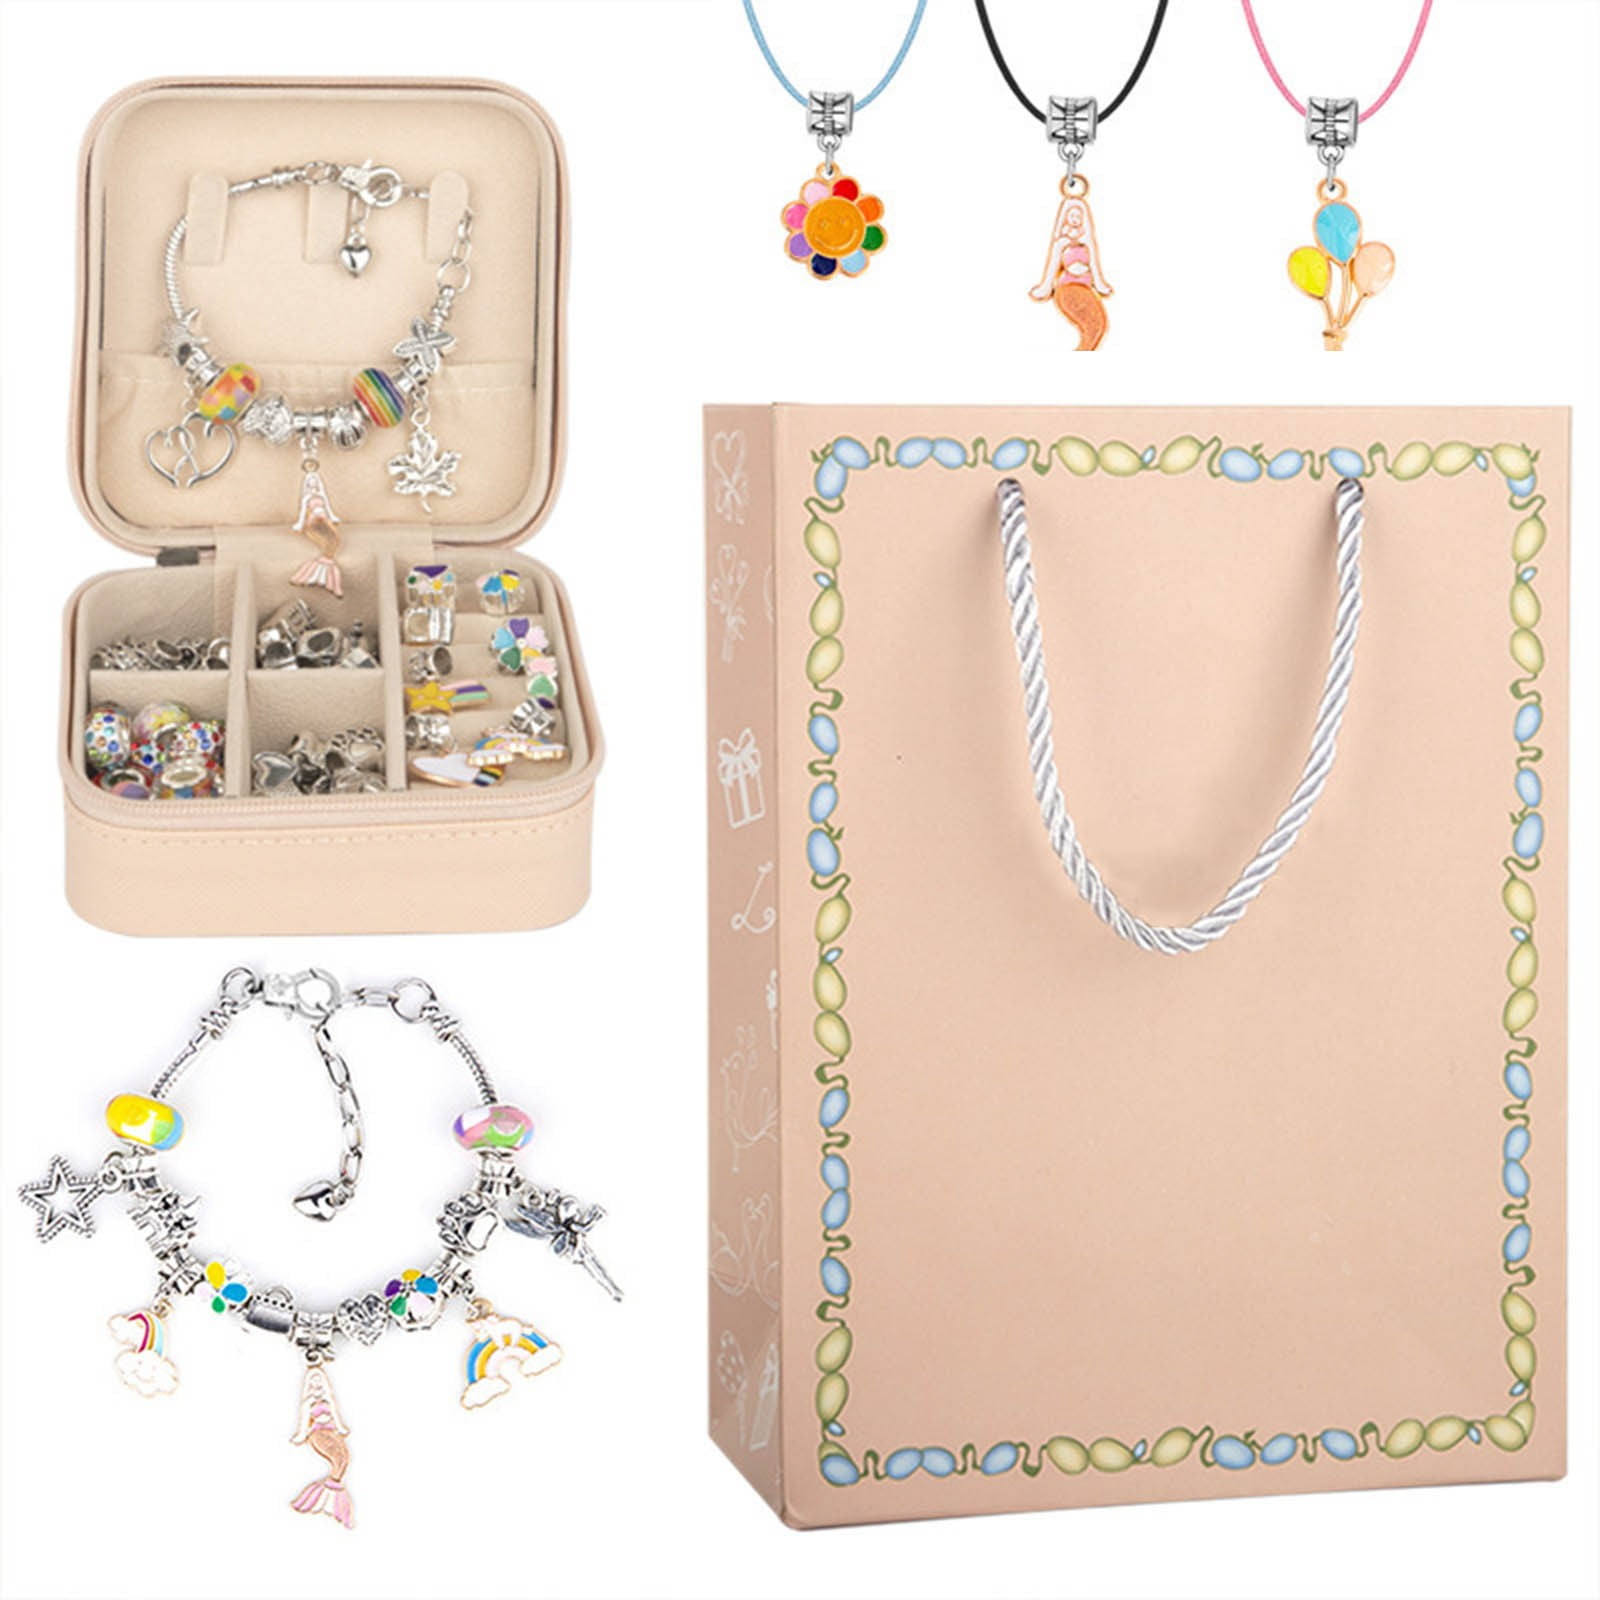  Sofier Charm Bracelet Making Kit for Girls Jewelry Box